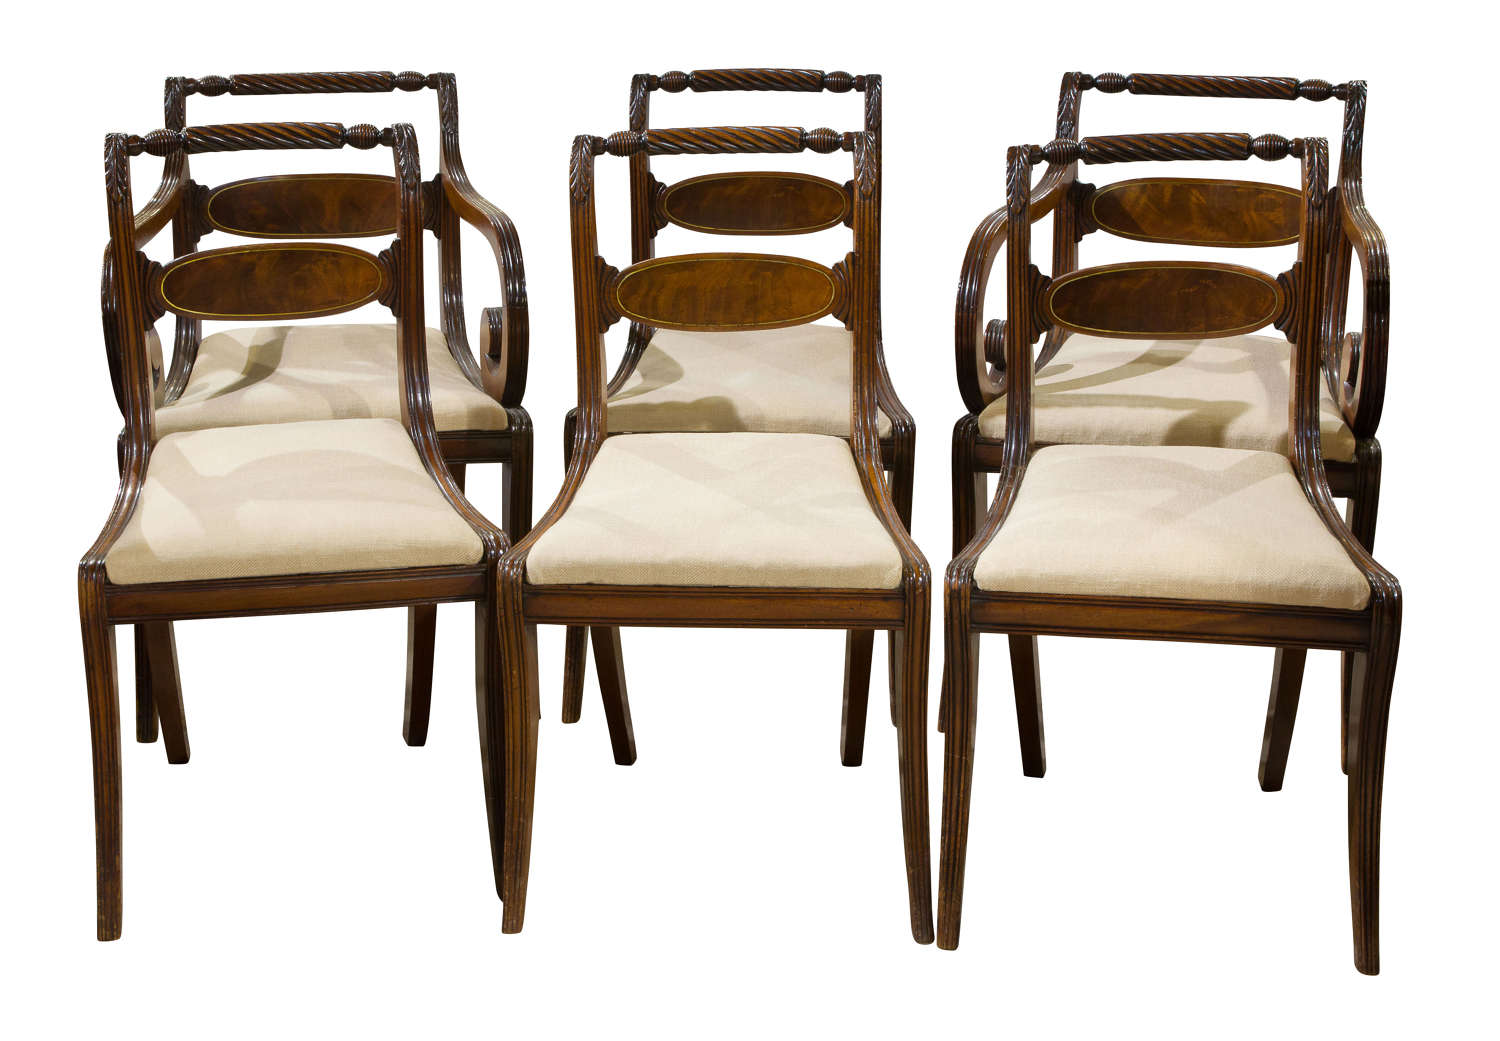 A set of Regency Mahogany Dining Chairs